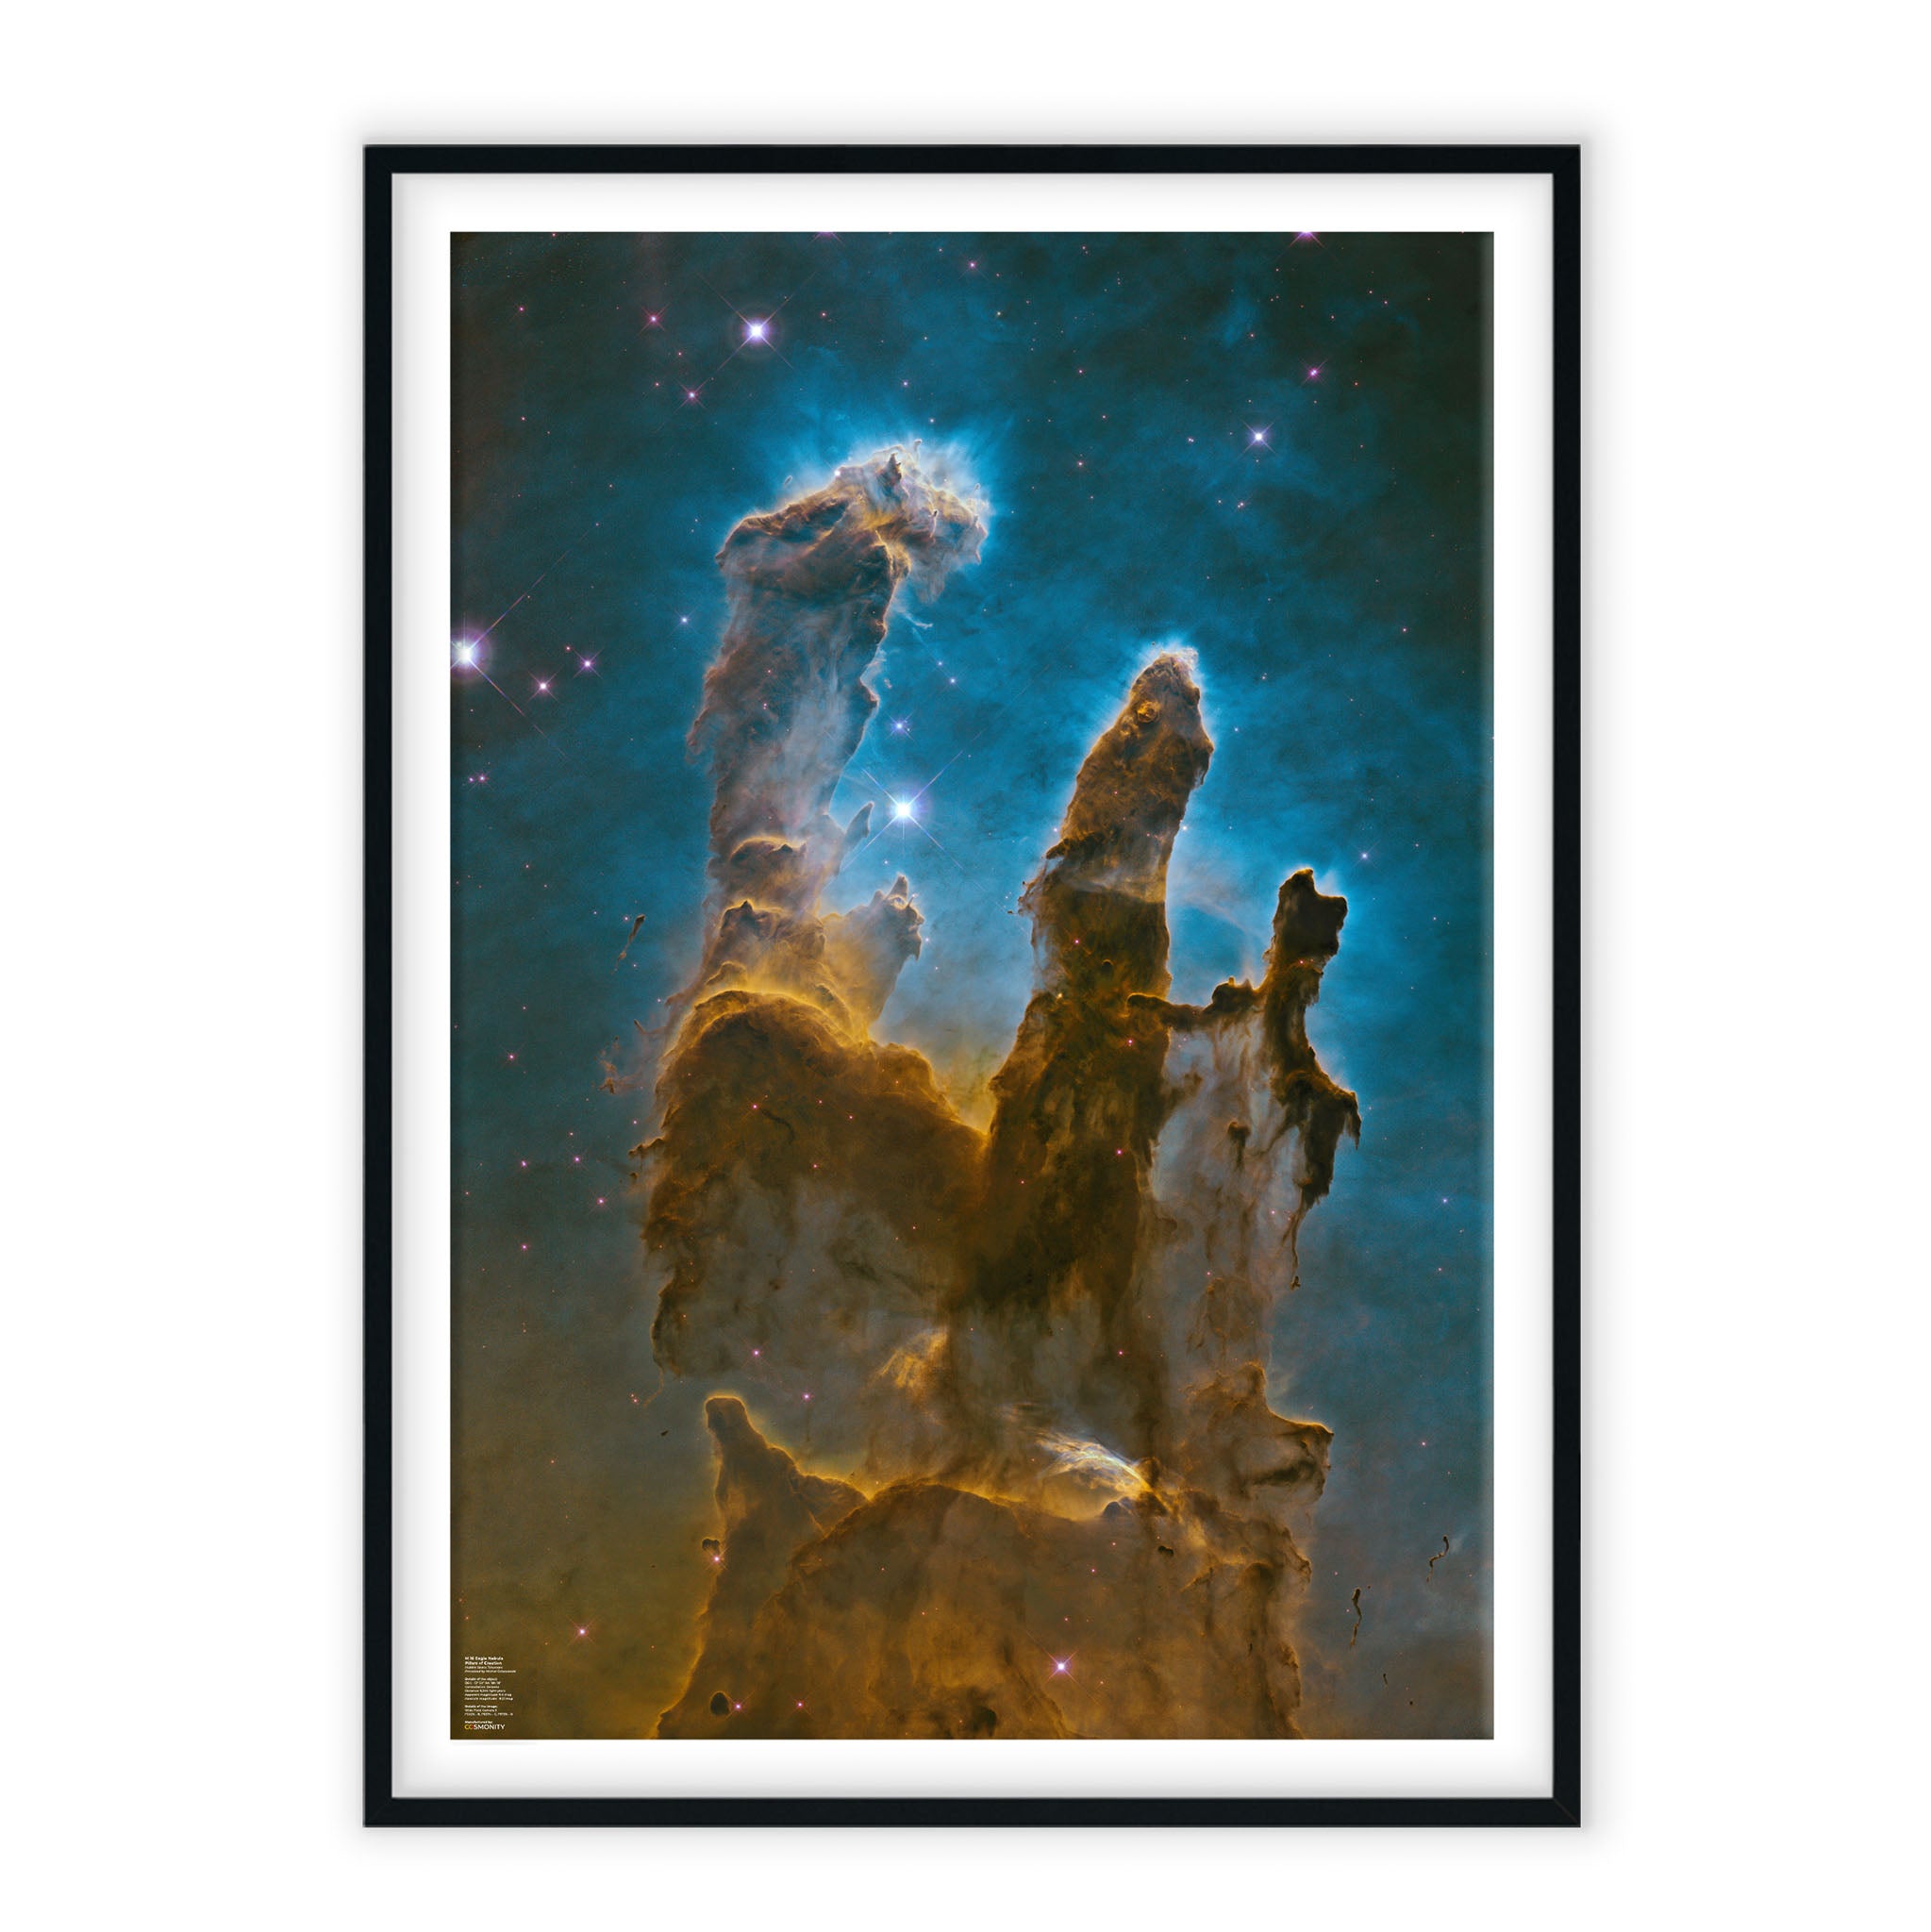 Eagle Nebula - Pillars of Creation